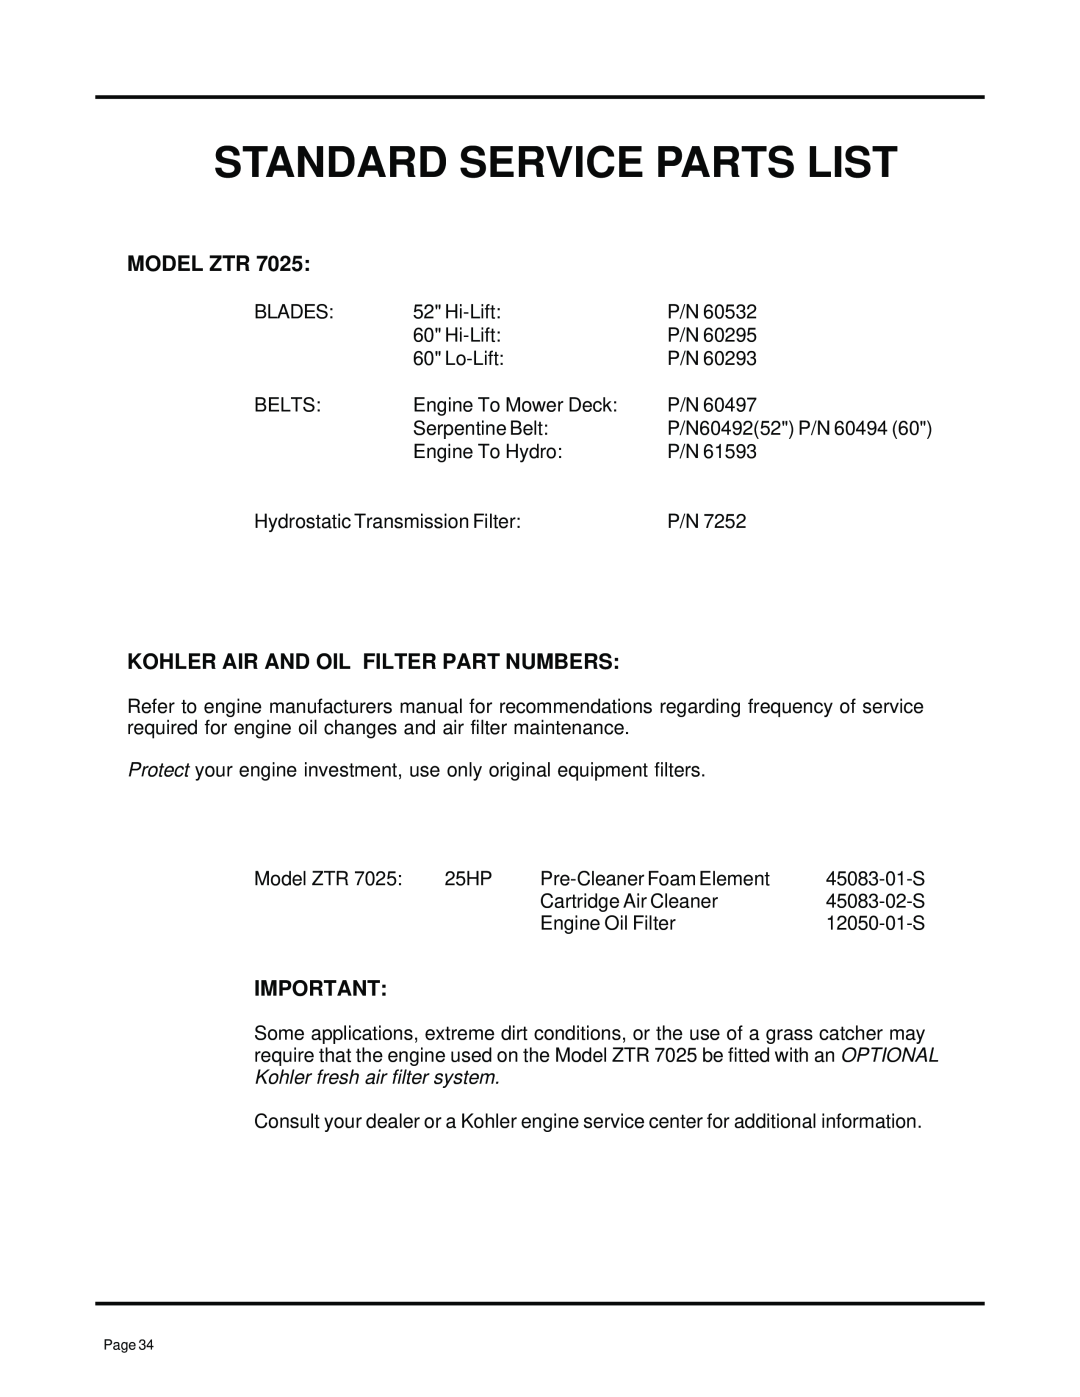 Dixon ZTR 7025, 13091-0500 manual Standard Service Parts List, Model Ztr, Kohler Air And Oil Filter Part Numbers 